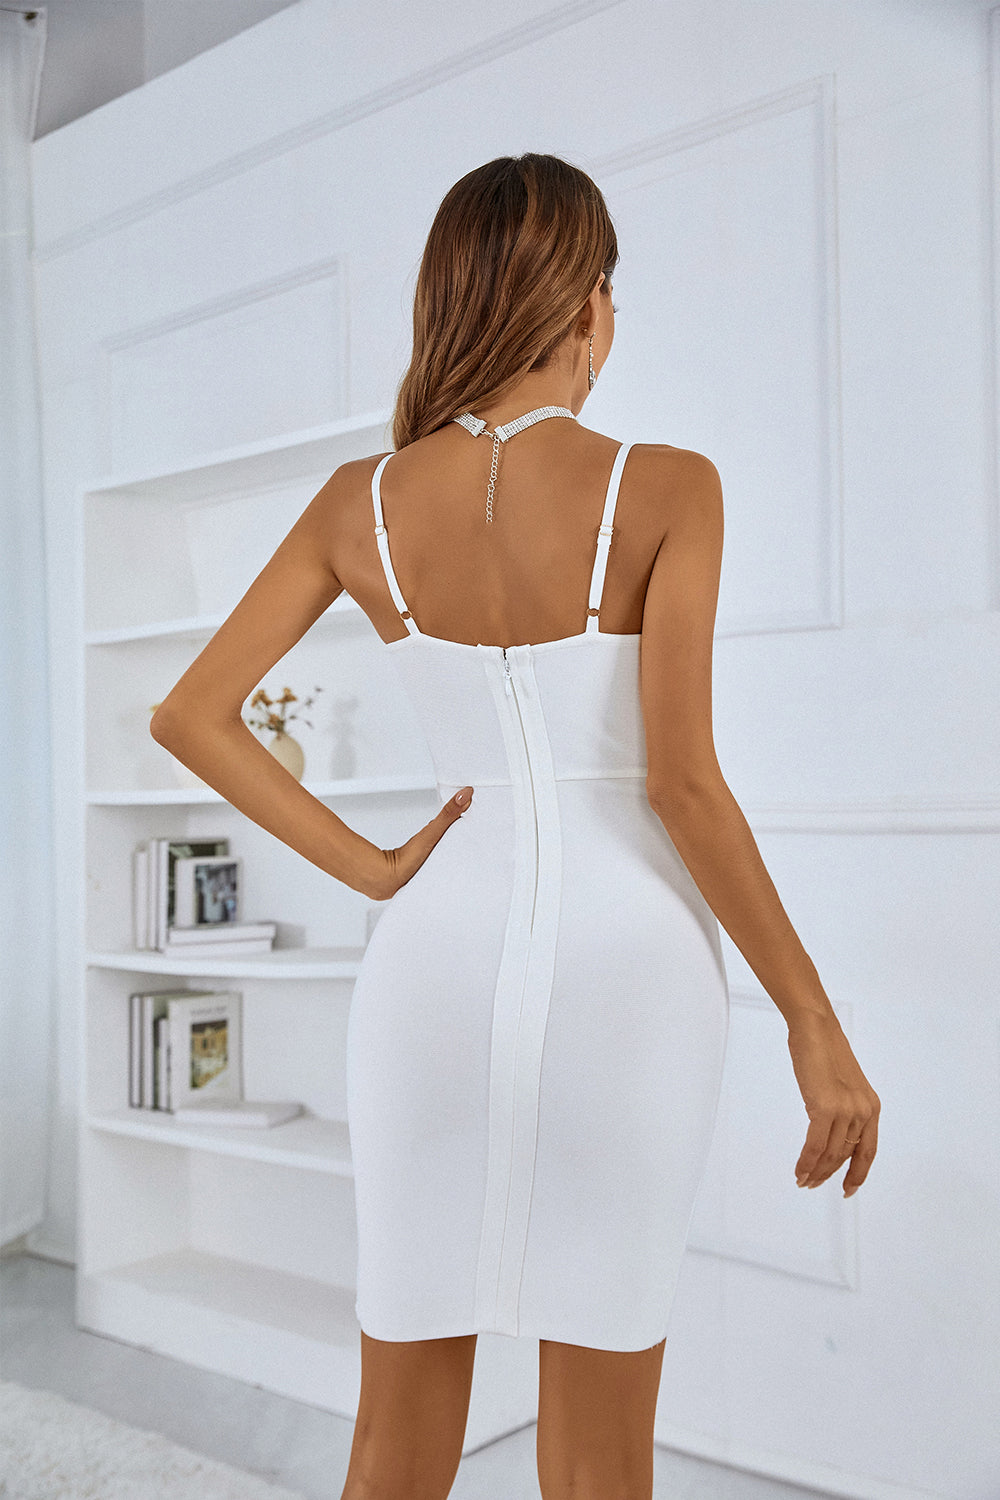 Sesidy-Verneya Sweetheart Diamante Mesh Dress-Women's Clothing Online Store